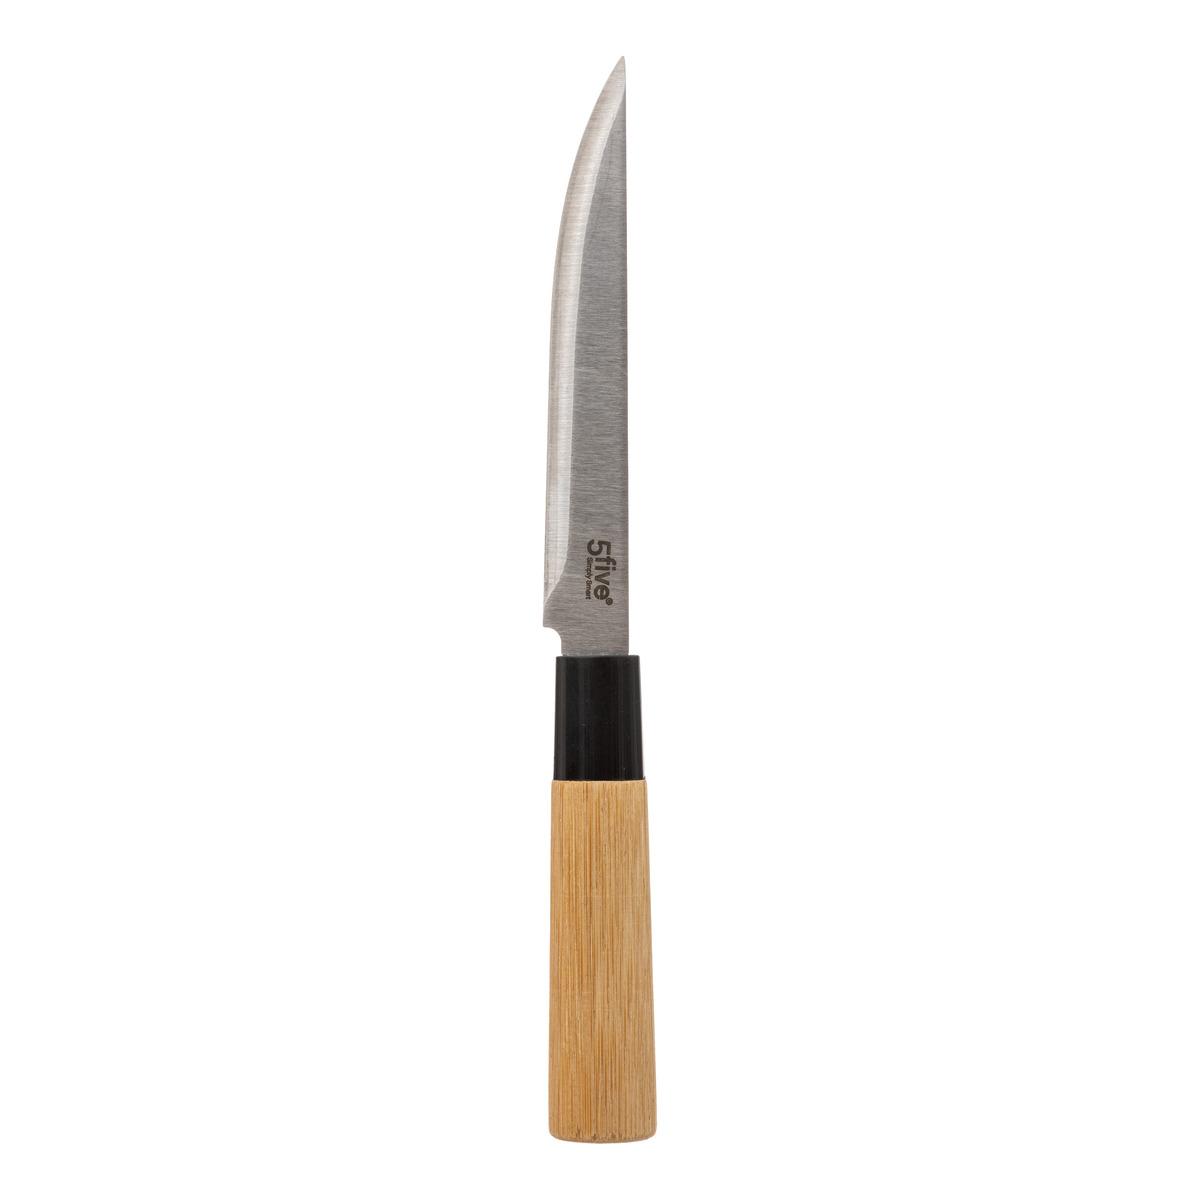 Bloc Couteaux & Ustensiles Blackbamboo 35cm Naturel pas cher